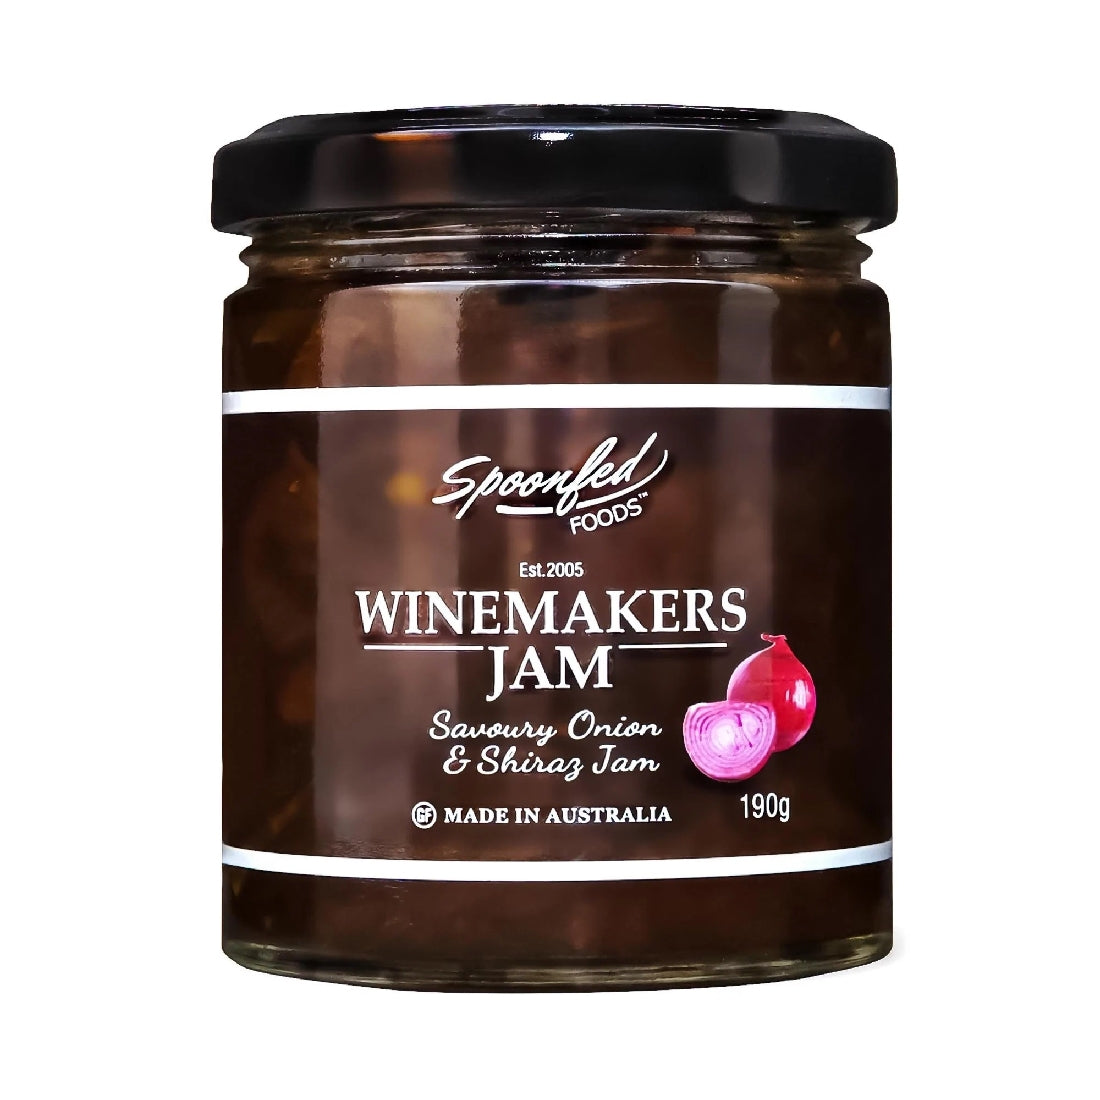 Spoonfed Foods Winemakers Jam 190g